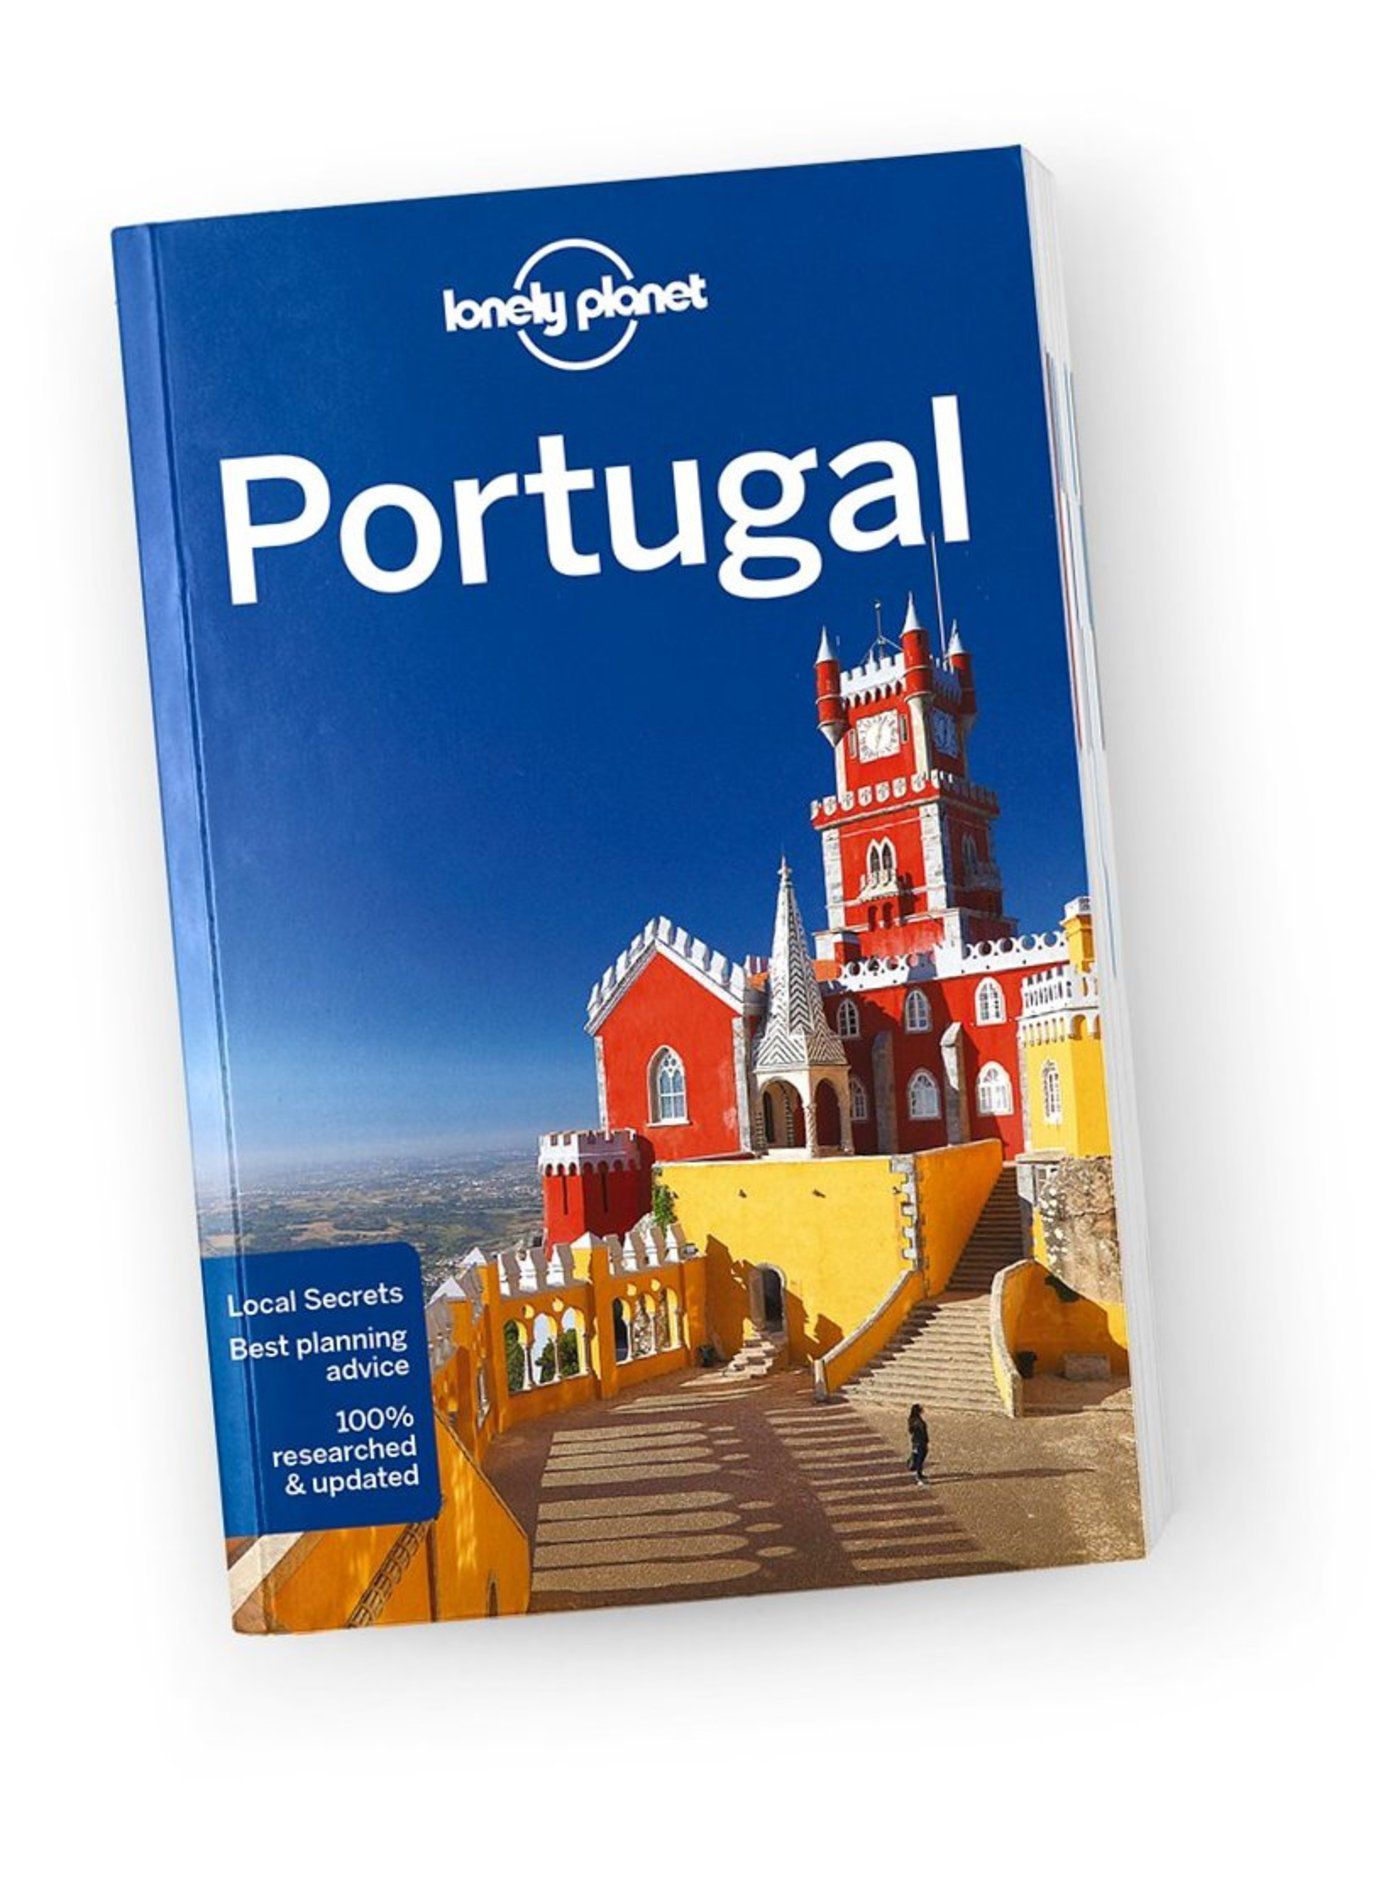 travel journal portugal